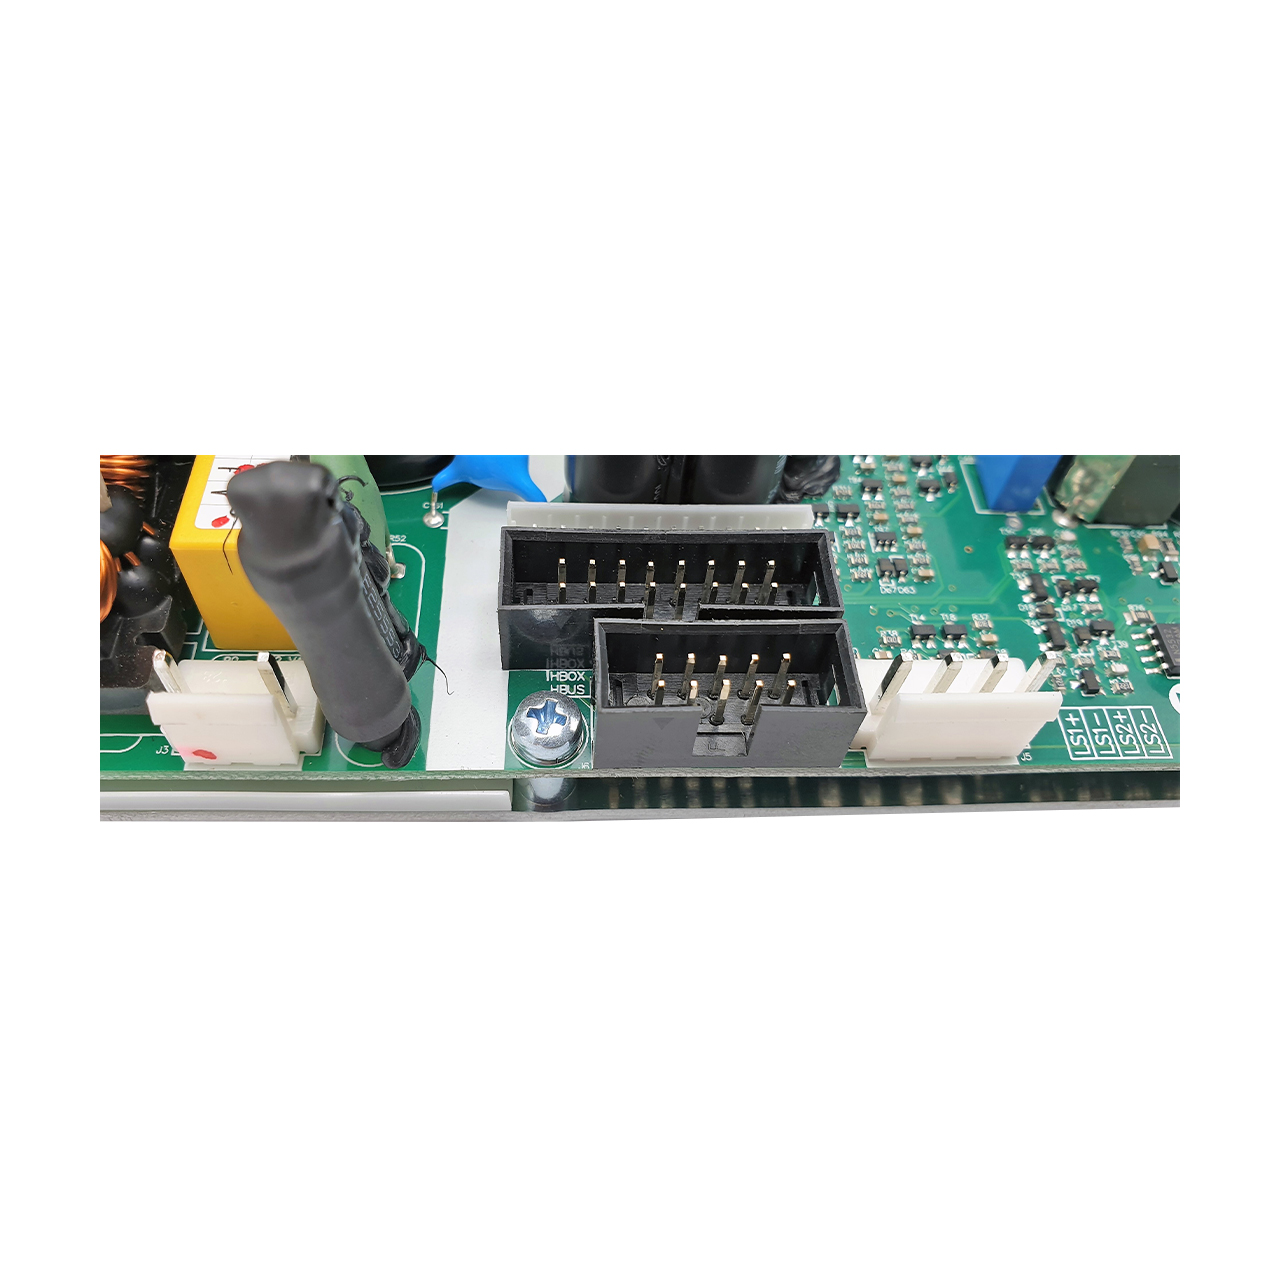 Hypex NC252MP OEM amplifier module